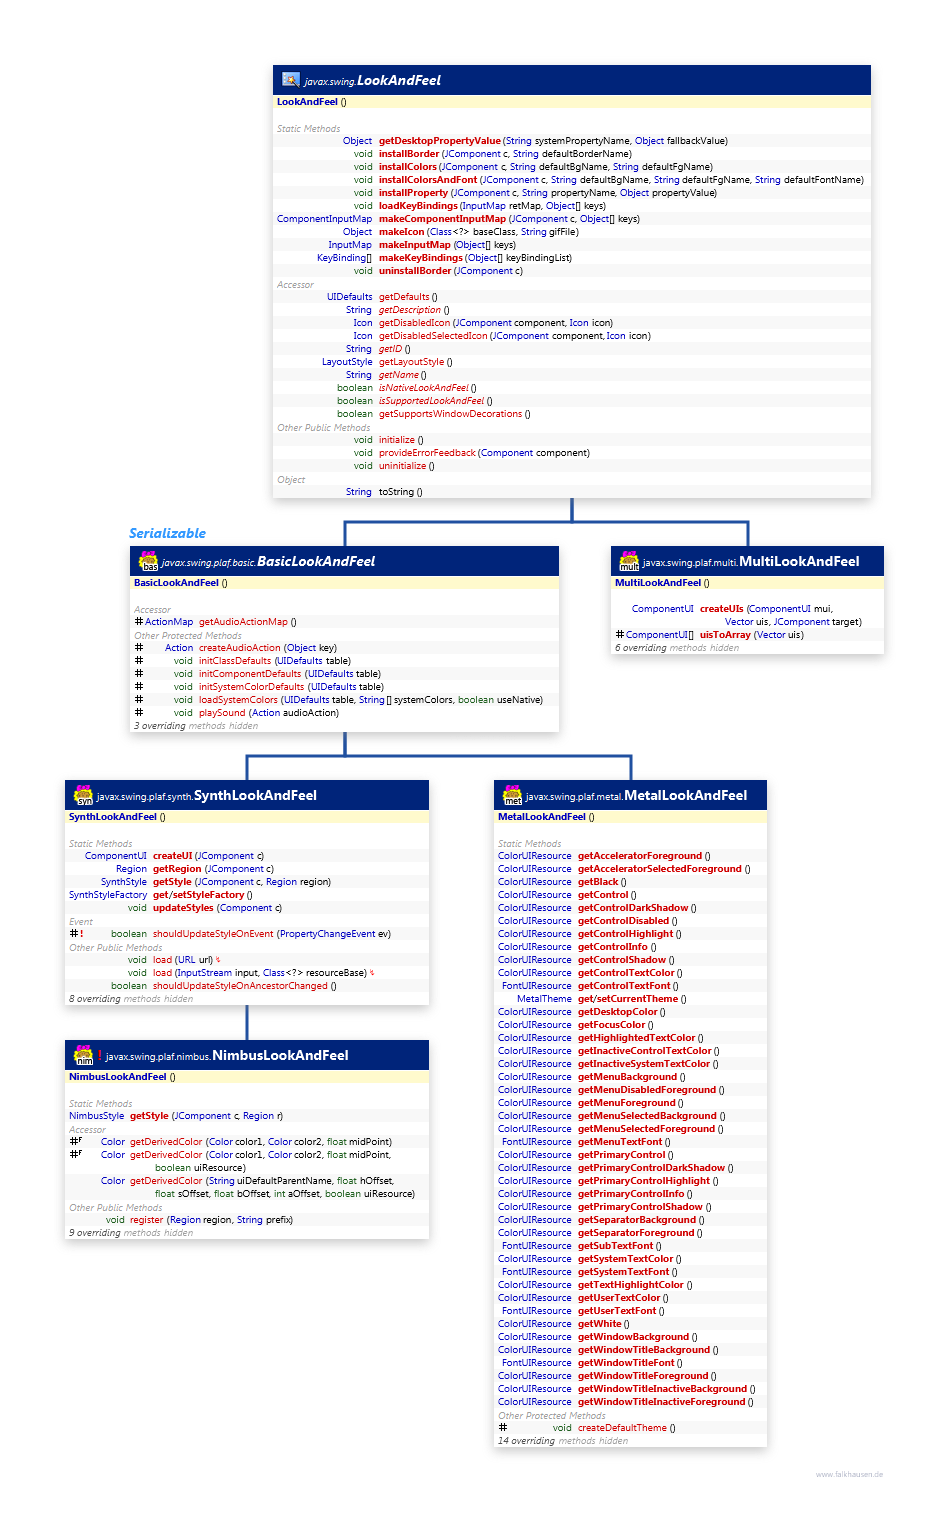 LookAndFeel class diagram and api documentation for Java 7